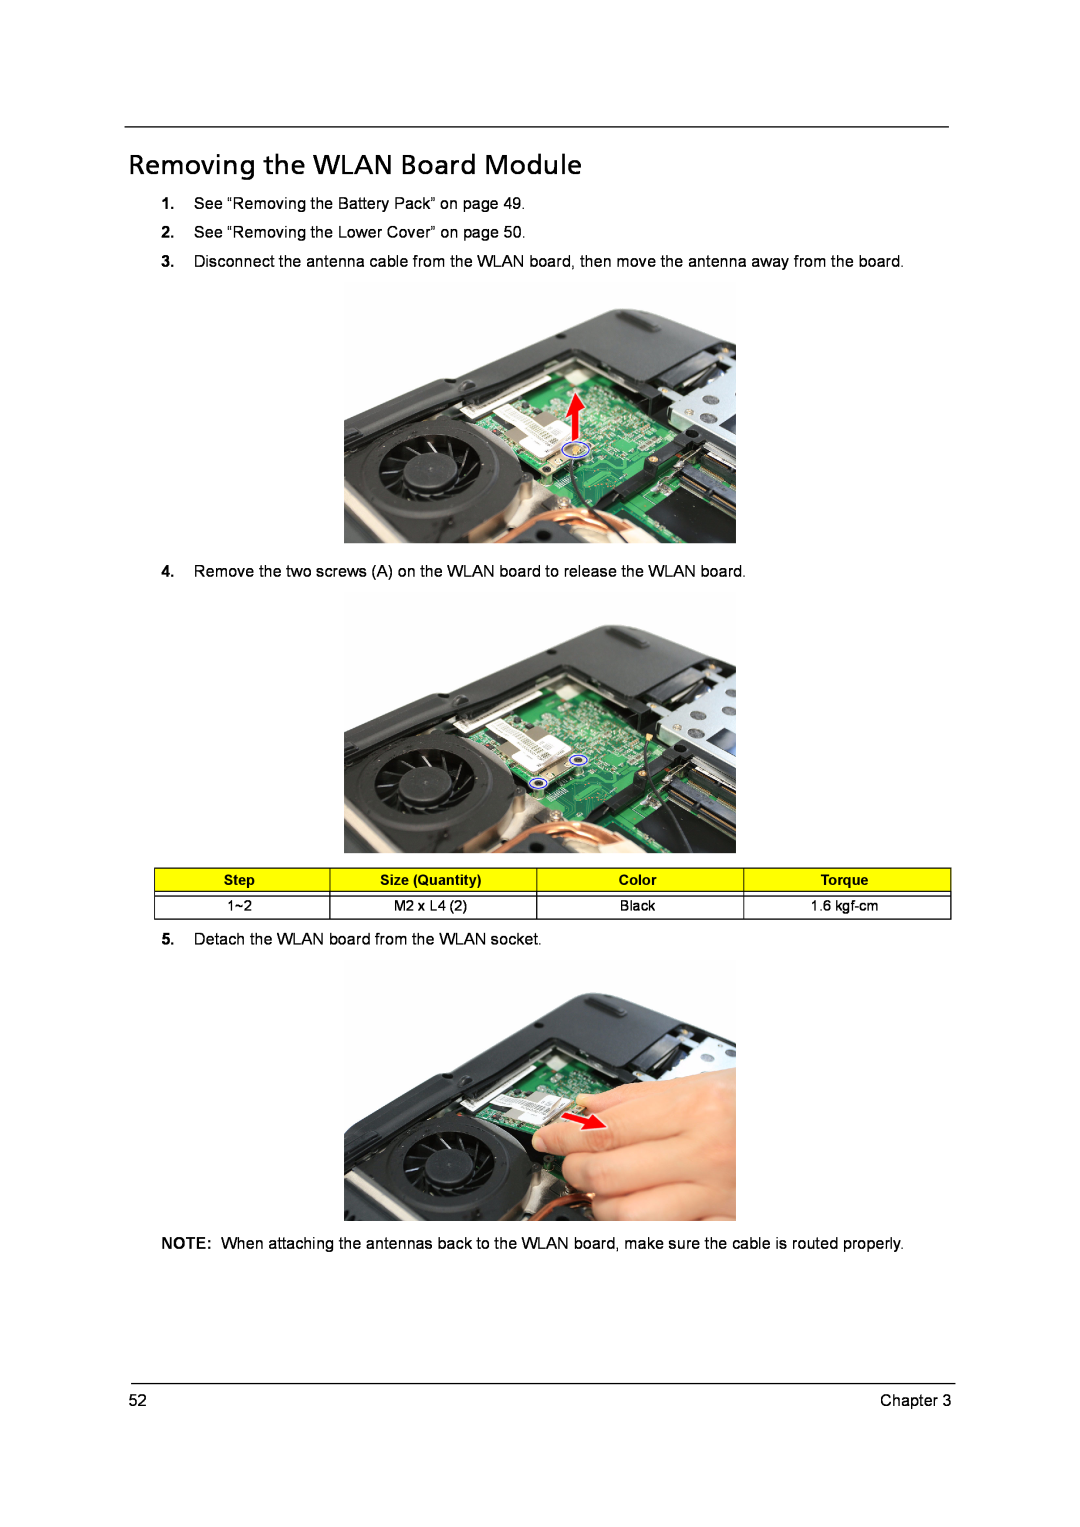 Acer 4315 manual Removing the WLAN Board Module, M2 x L4, kgf-cm 